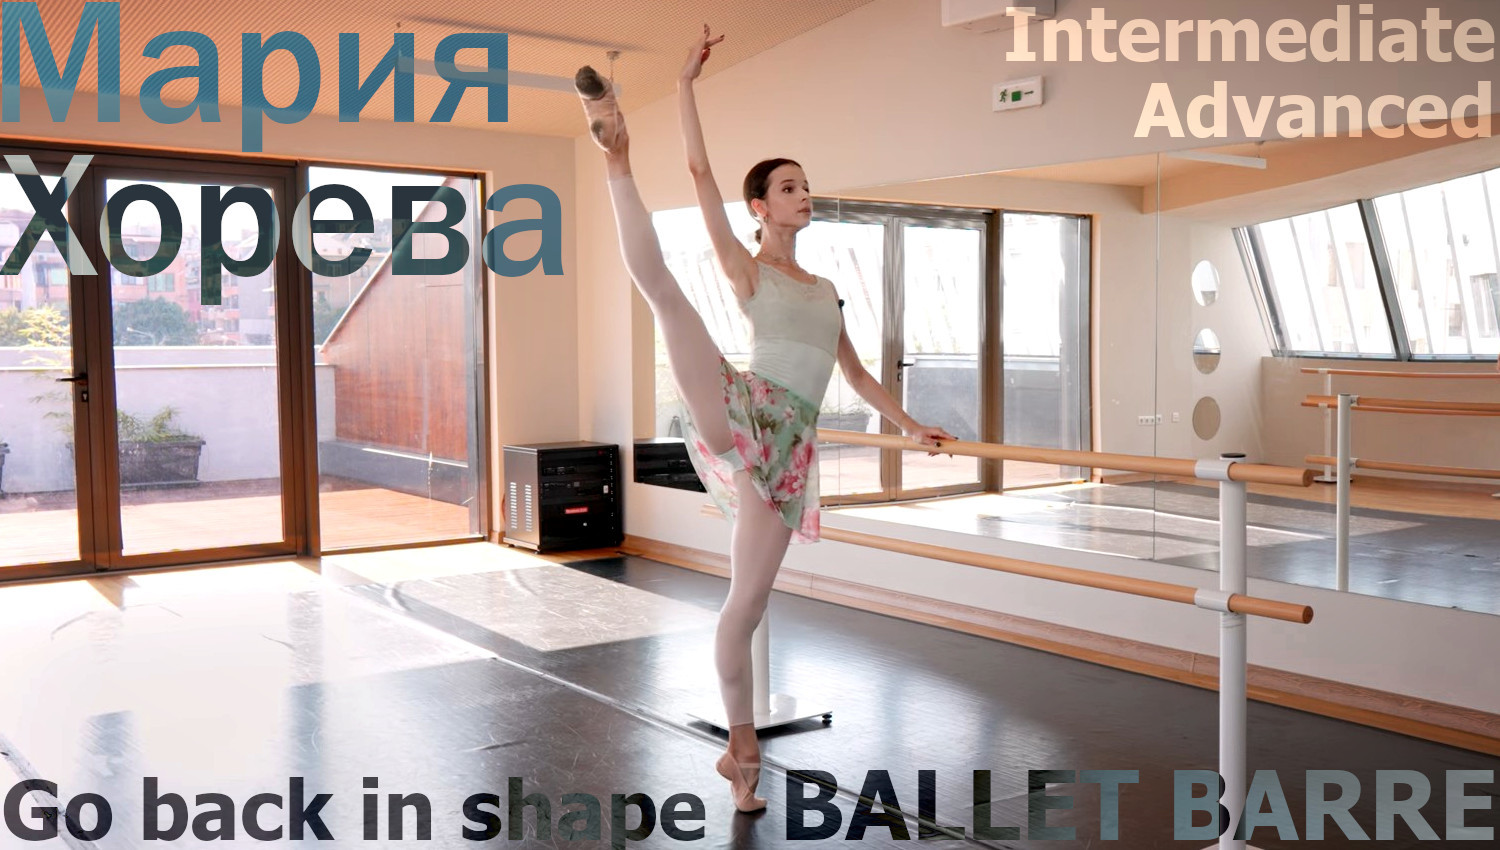 Maria Khoreva - Go back in shape Intermediate | Advanced Ballet Barre